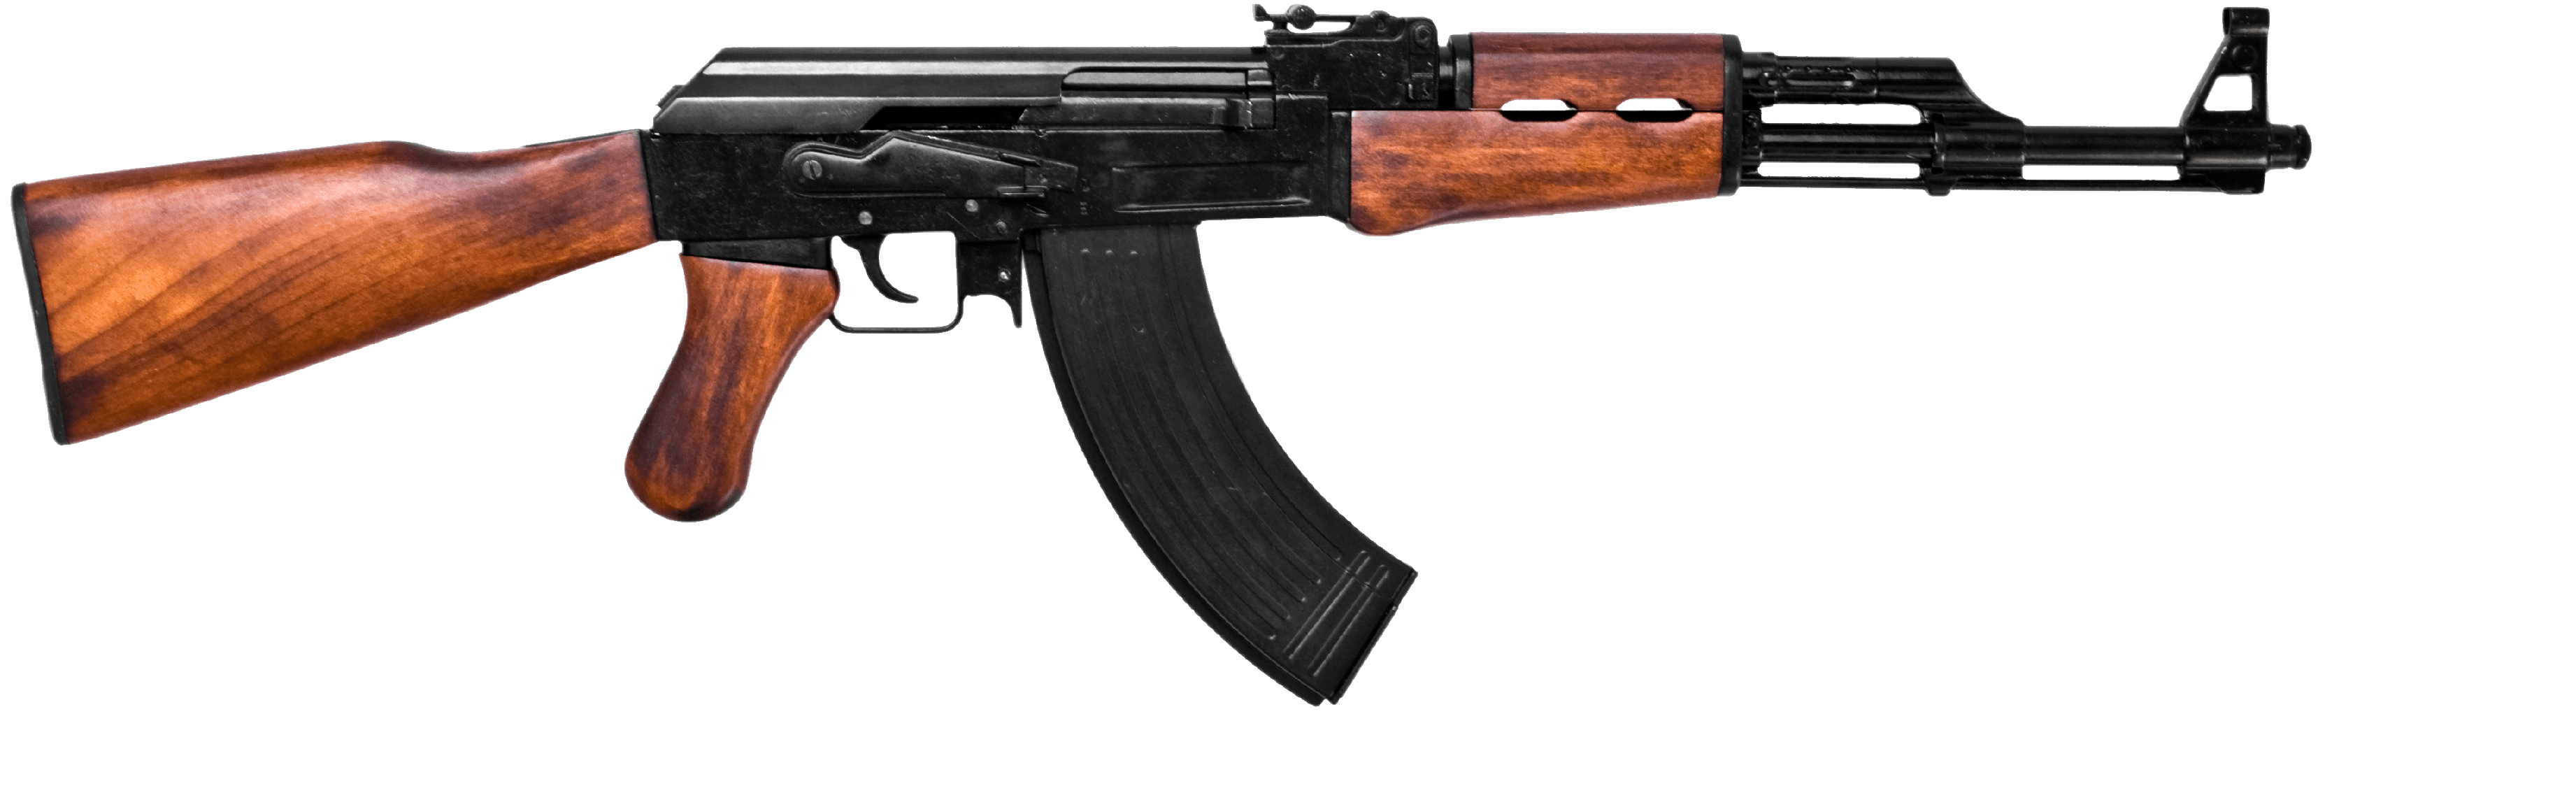 Rifle PNG HD - 126673